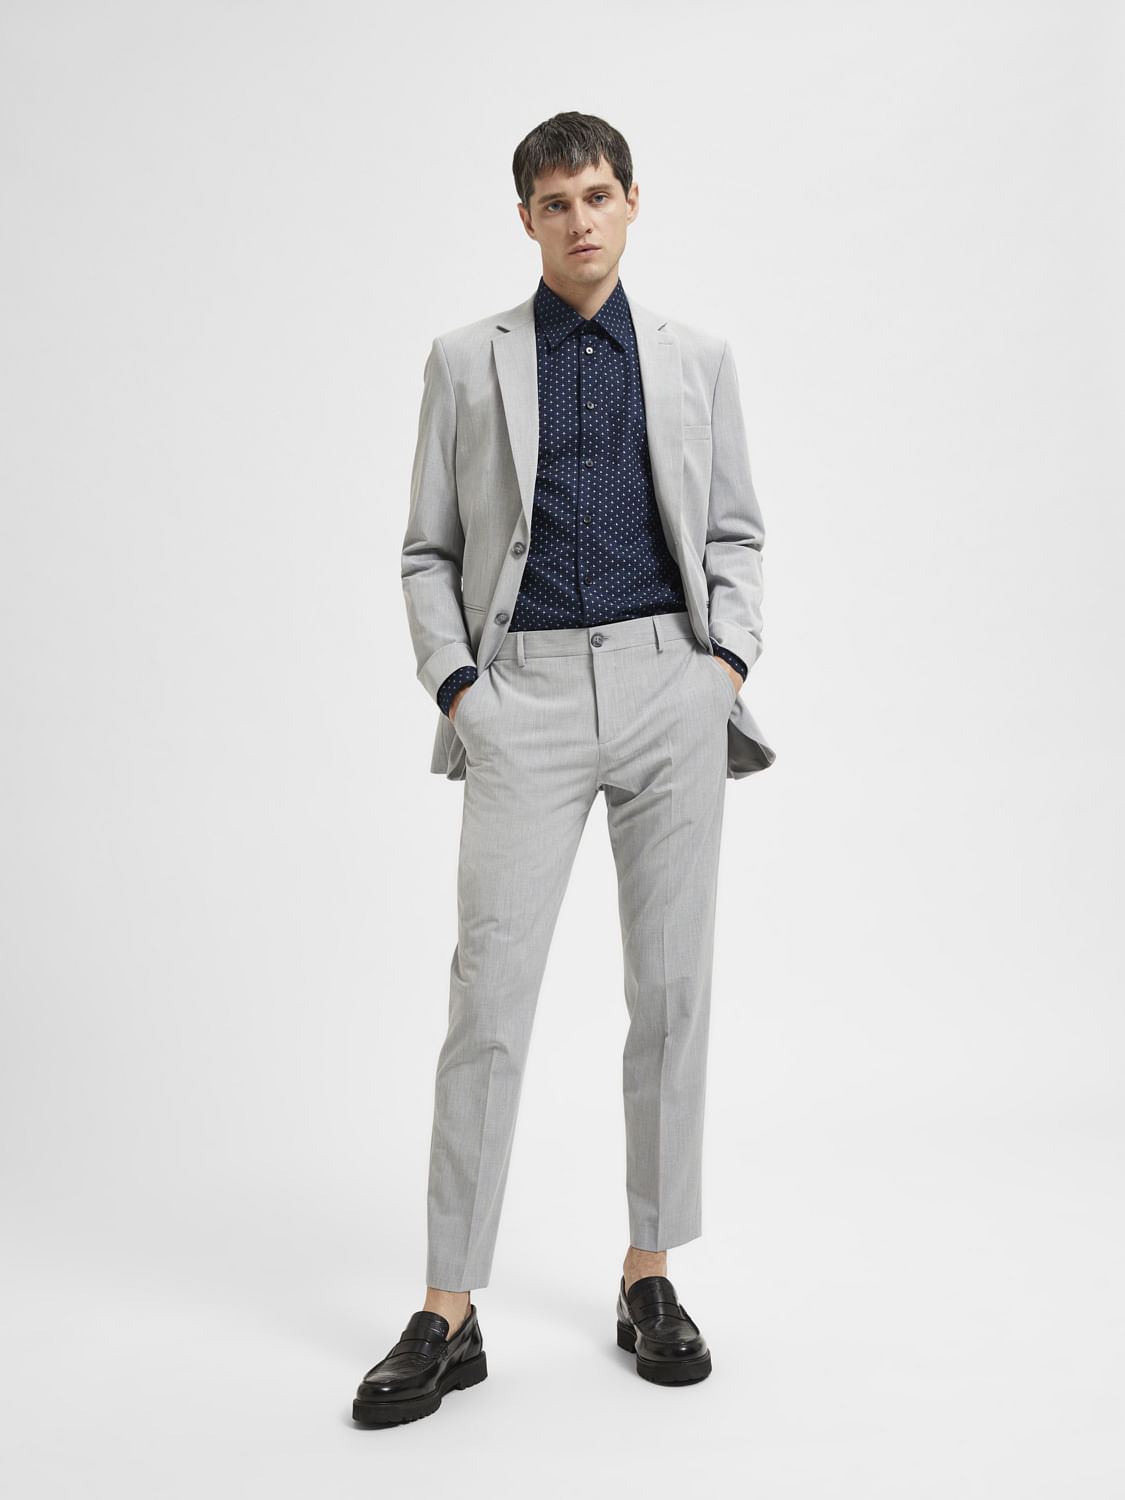 New Look skinny suit trouser in dark grey | ASOS